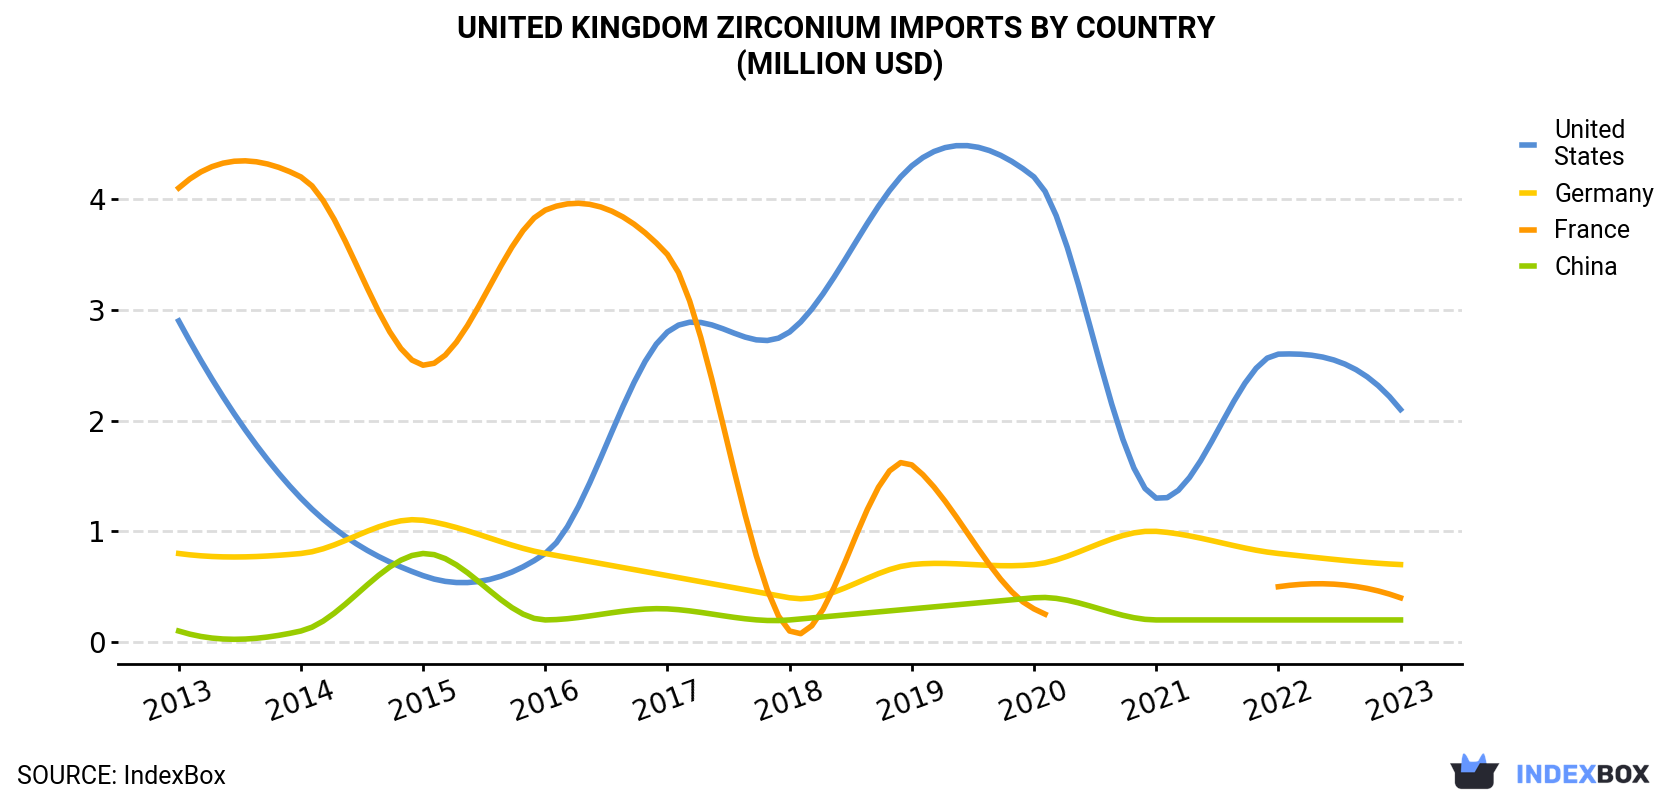 United Kingdom Zirconium Imports By Country (Million USD)